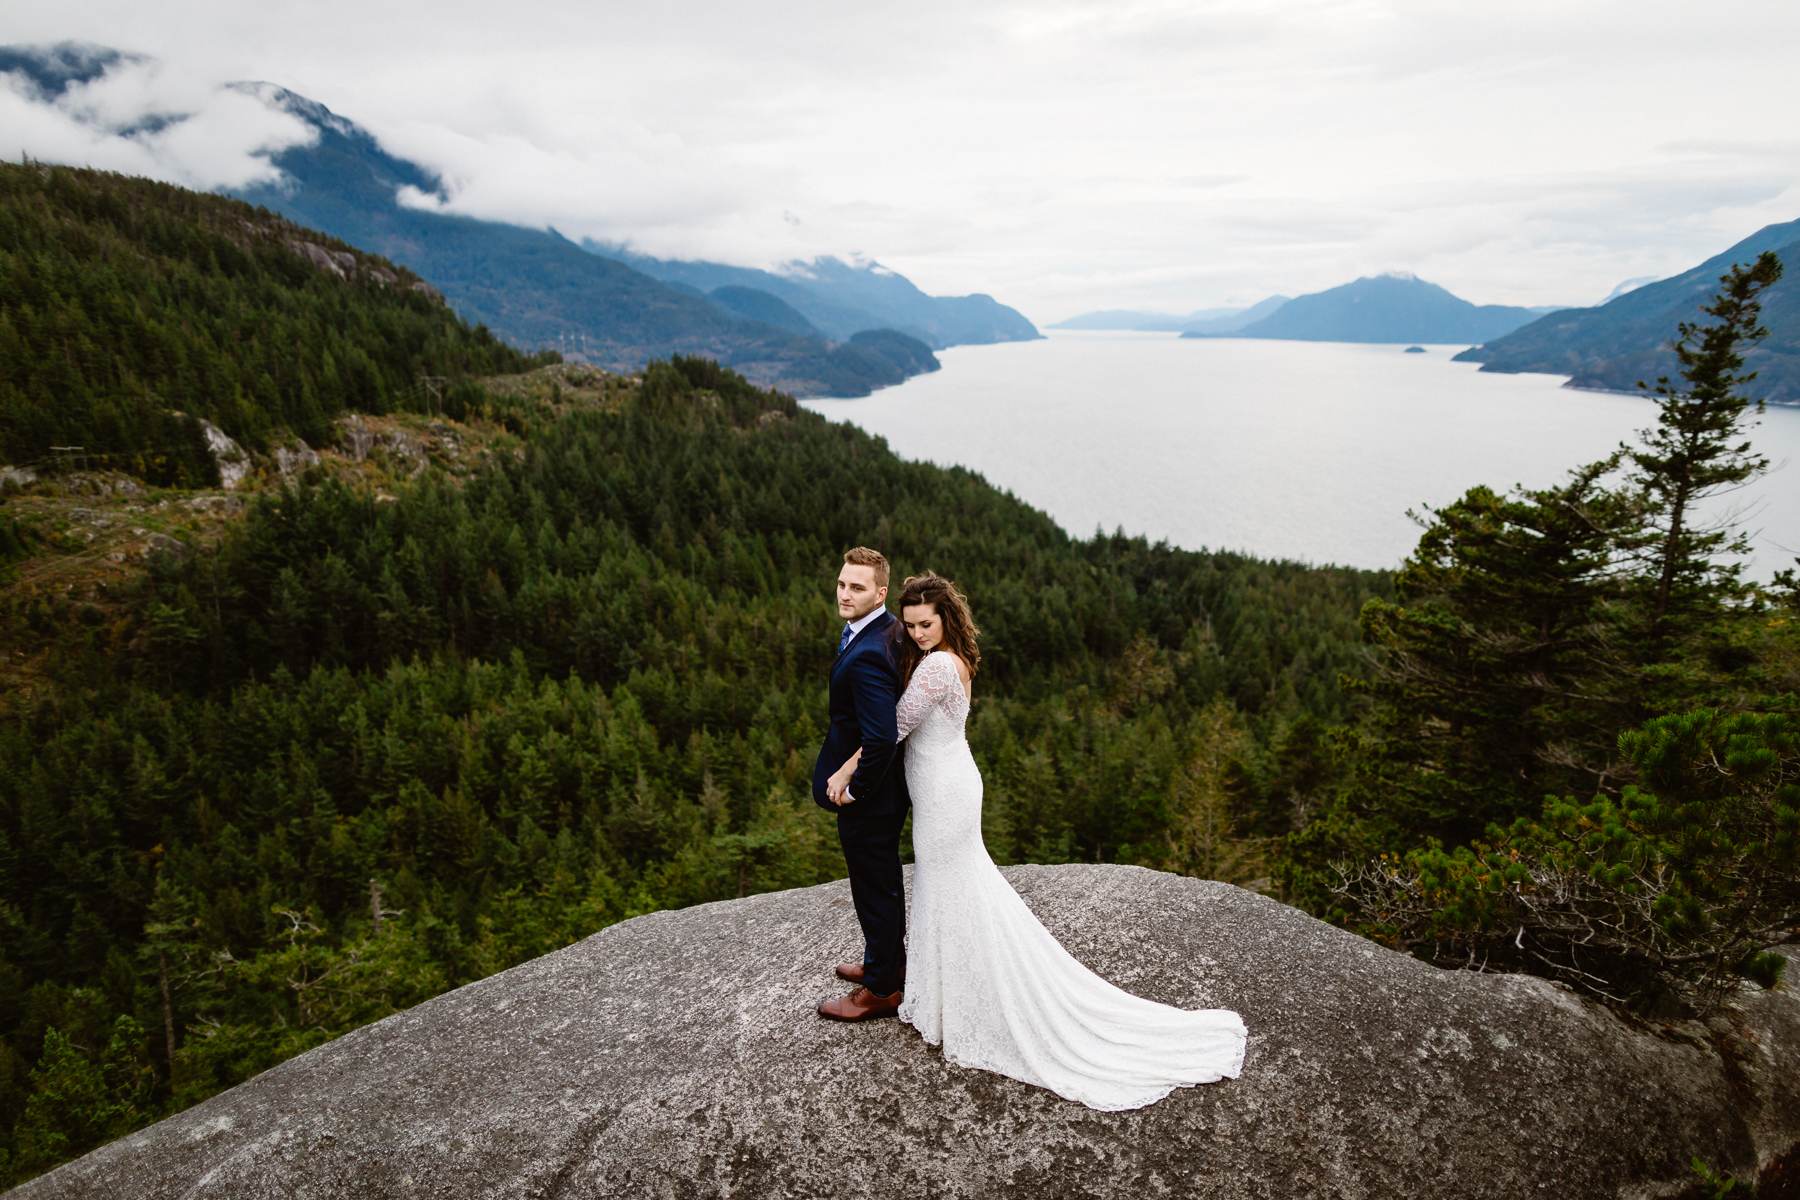 Squamish Wedding Photographers at an Adventurous Elopement - Image 38